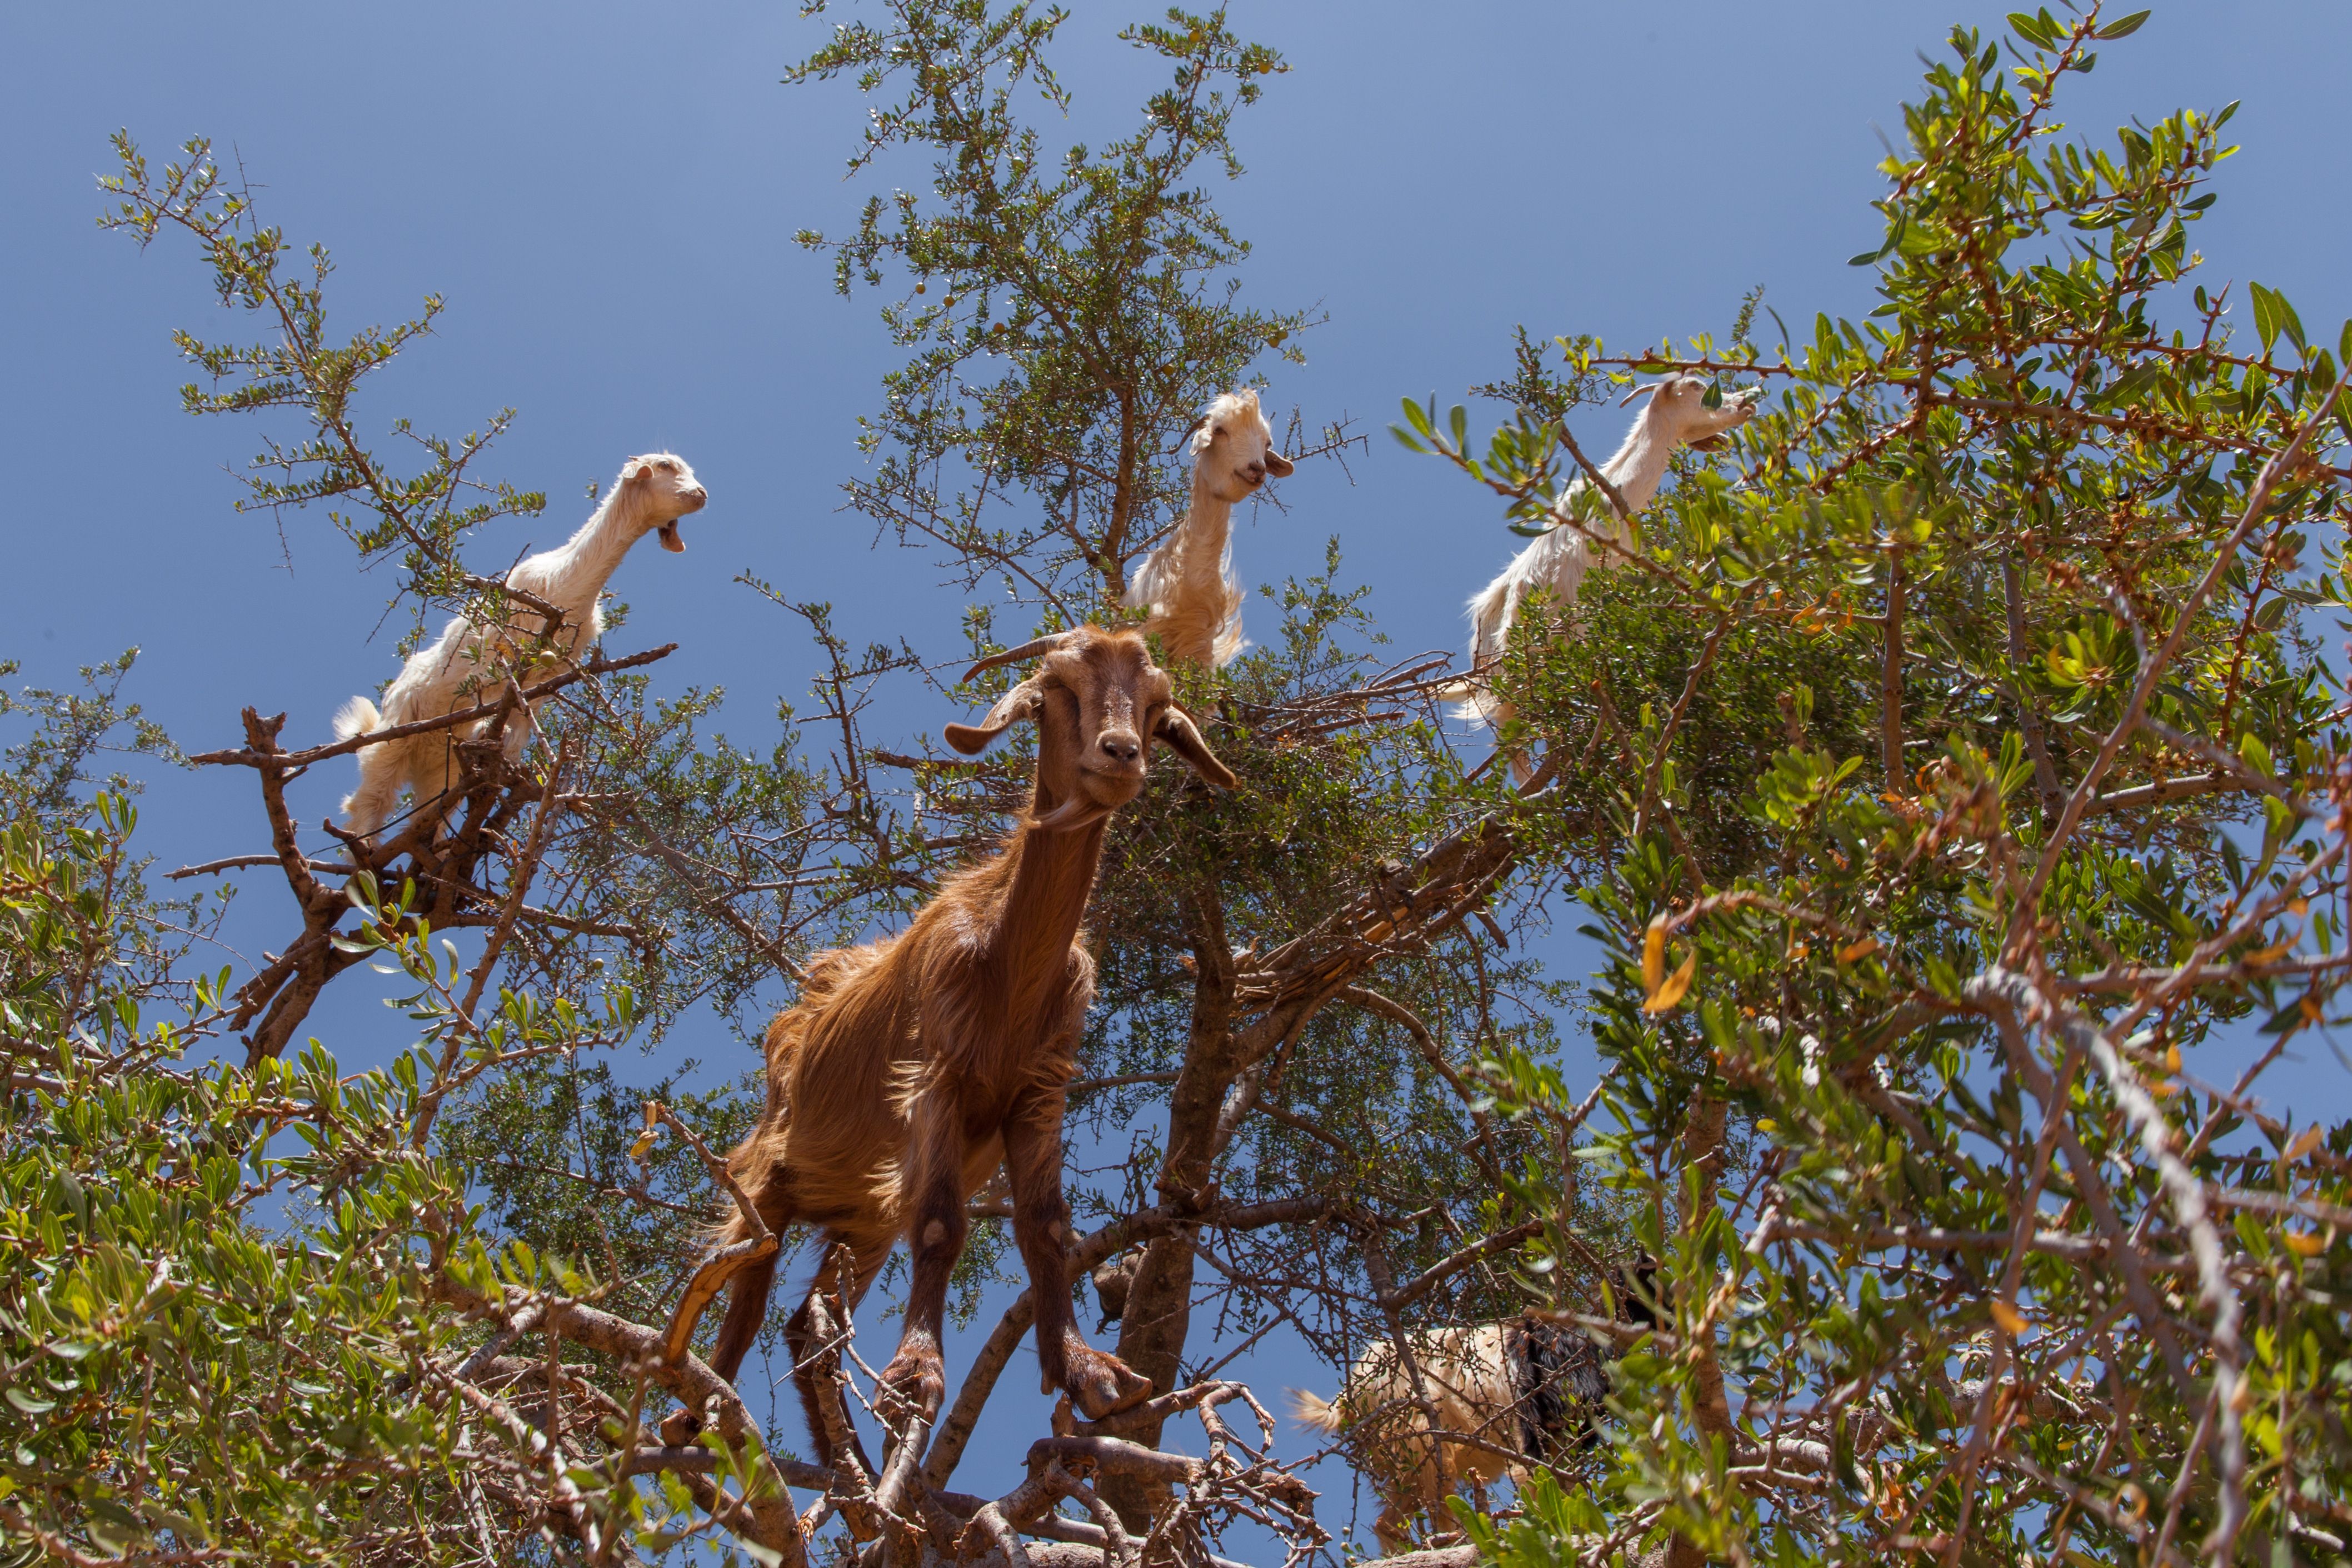 Barcelona goats in an argan tree